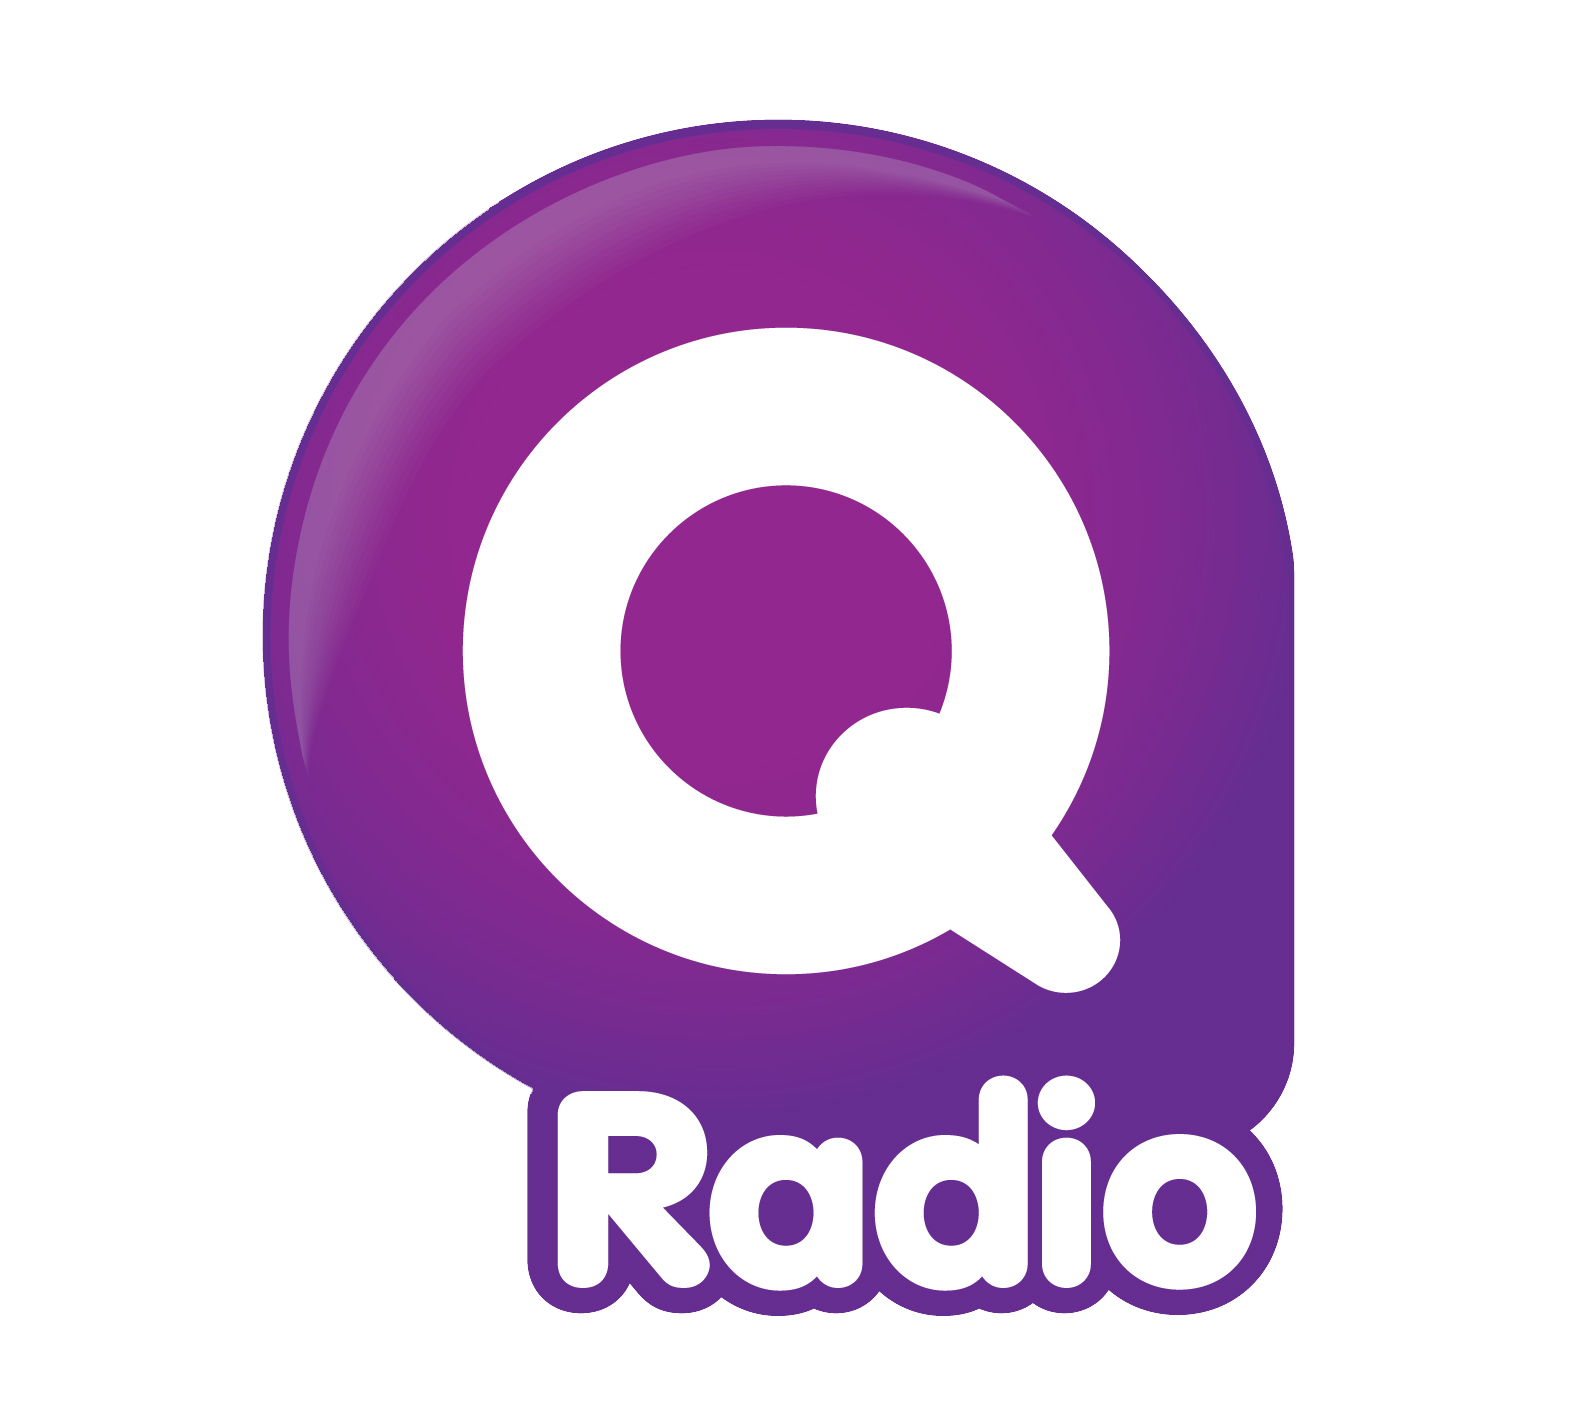 q radio logo.png